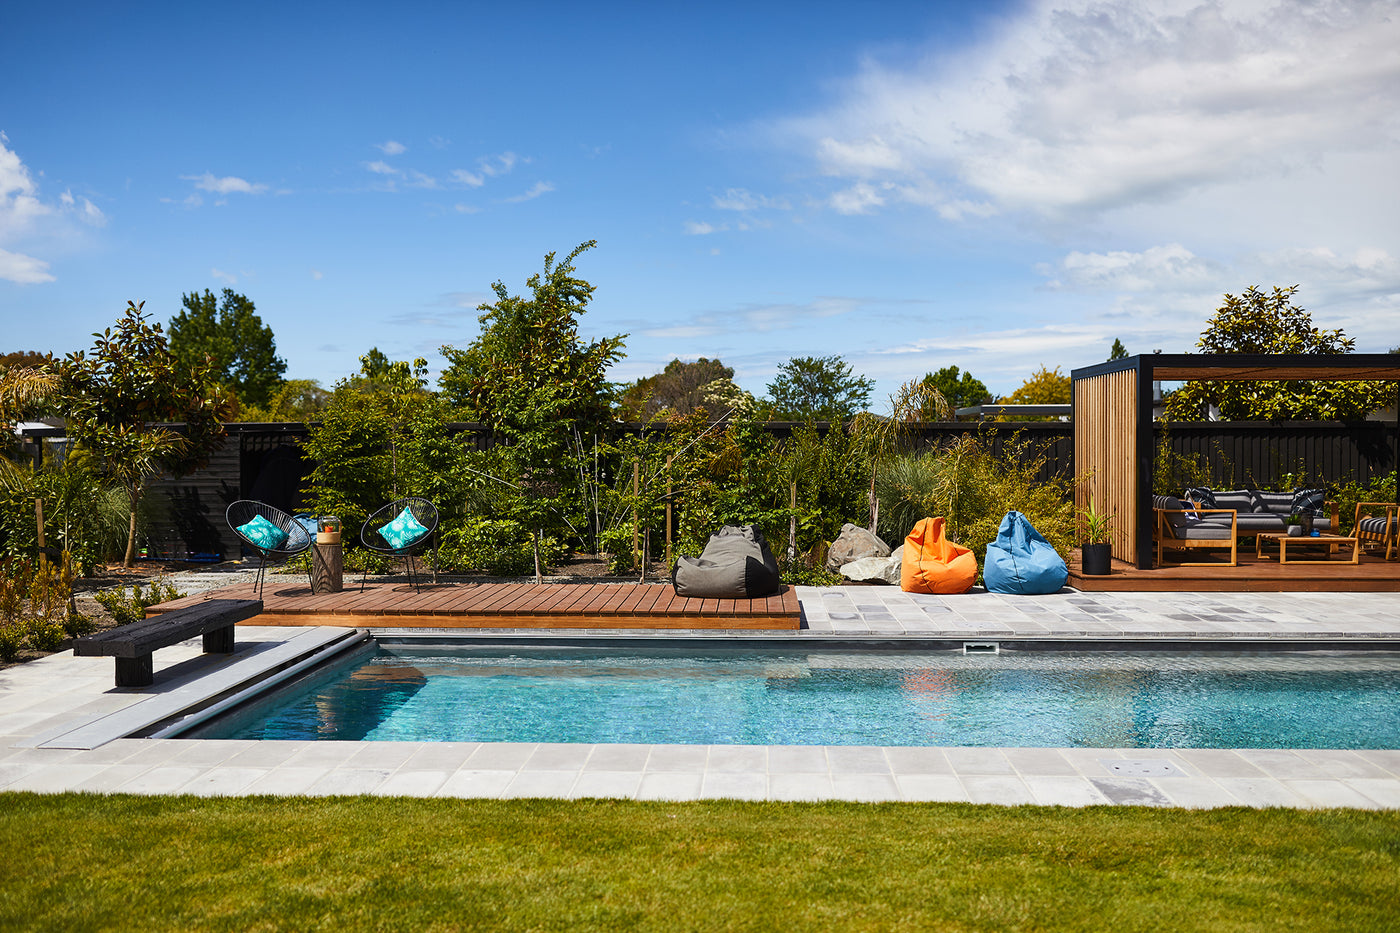 Pools by Aquanort Pools in Blenheim, Marlborough, NZ